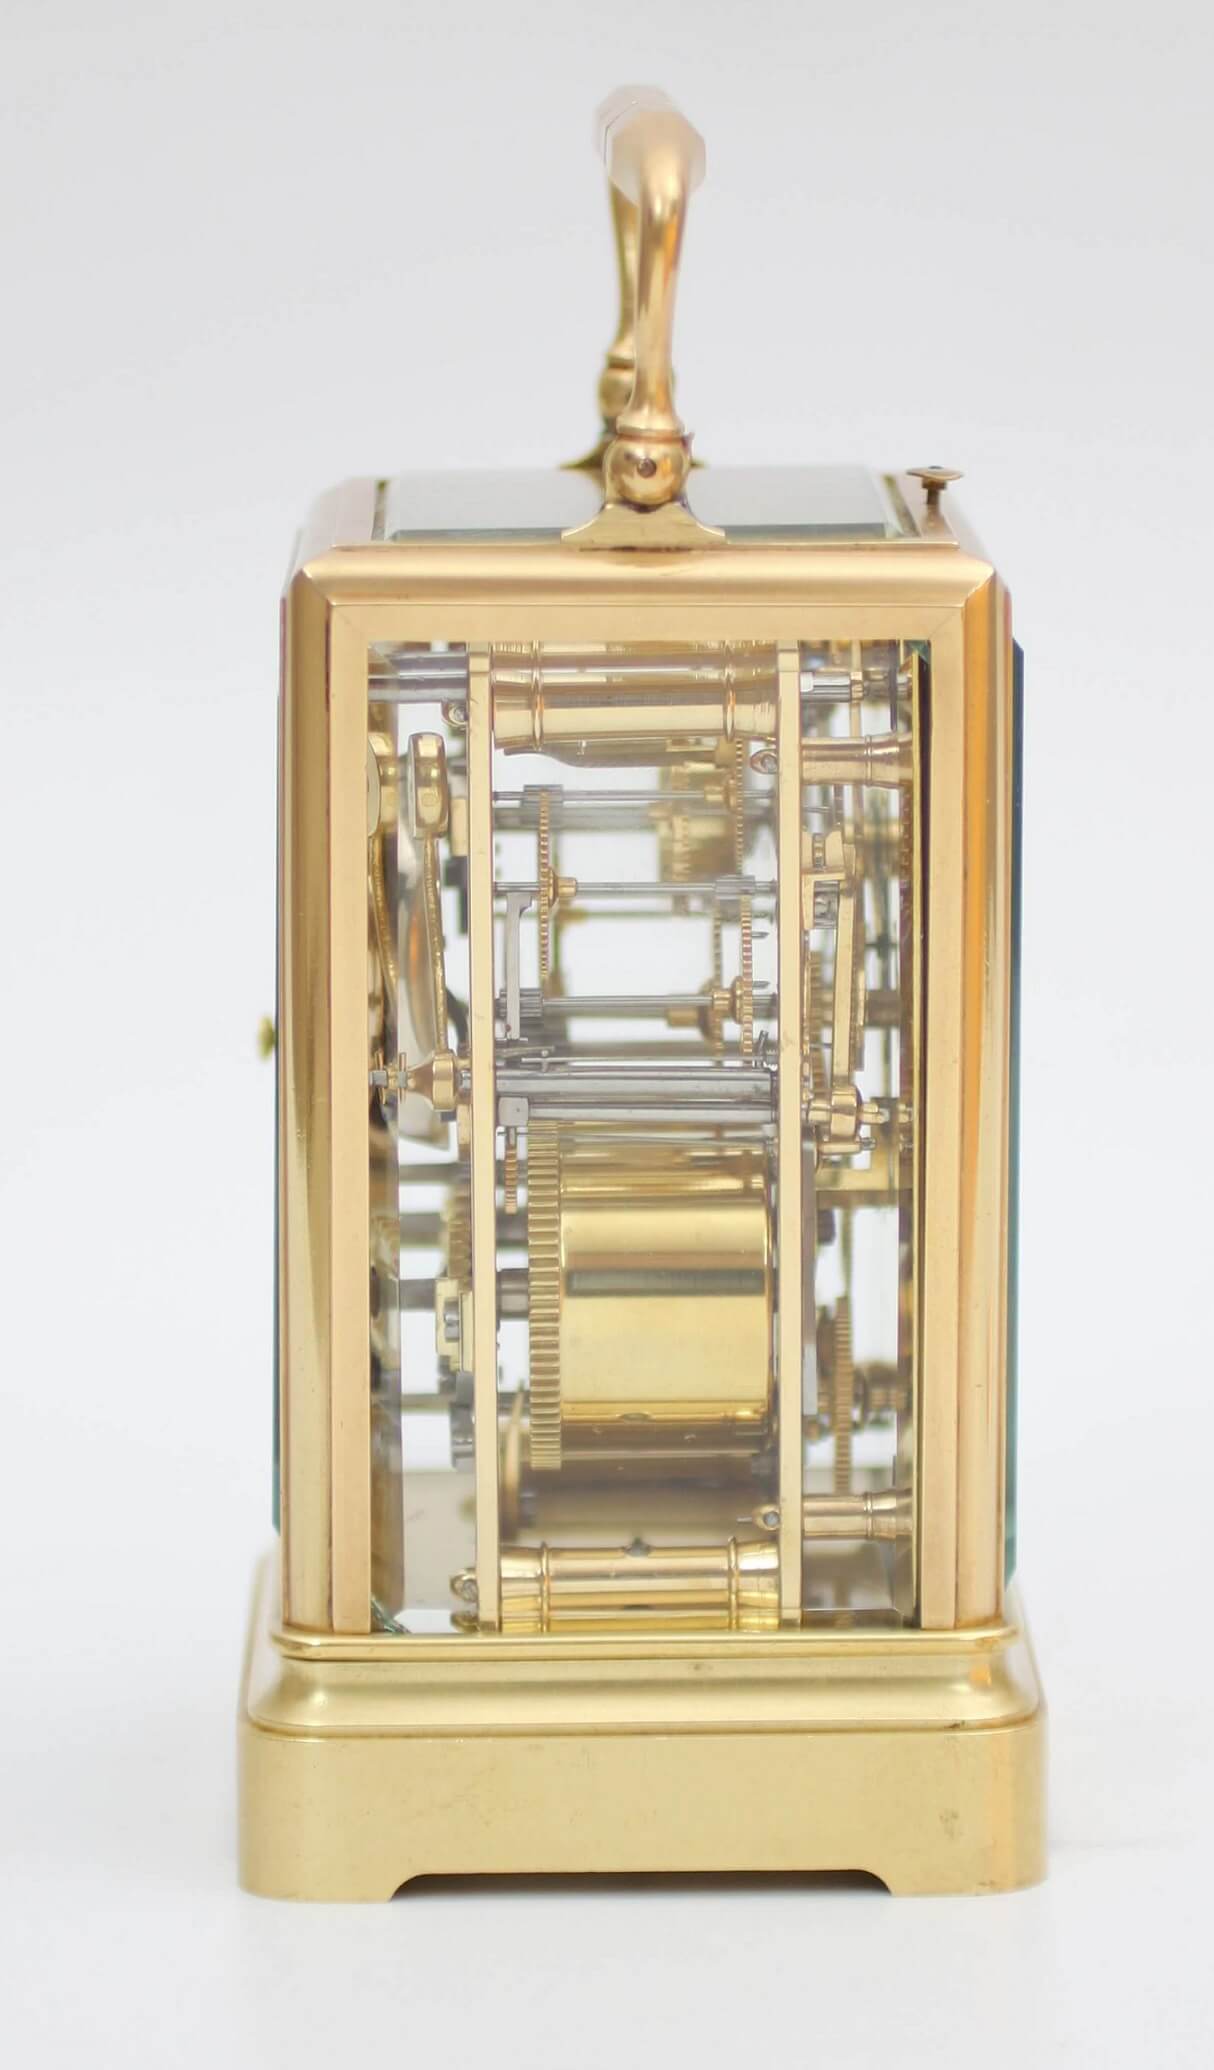 French one piece brass Drocourt carriage clock 1850